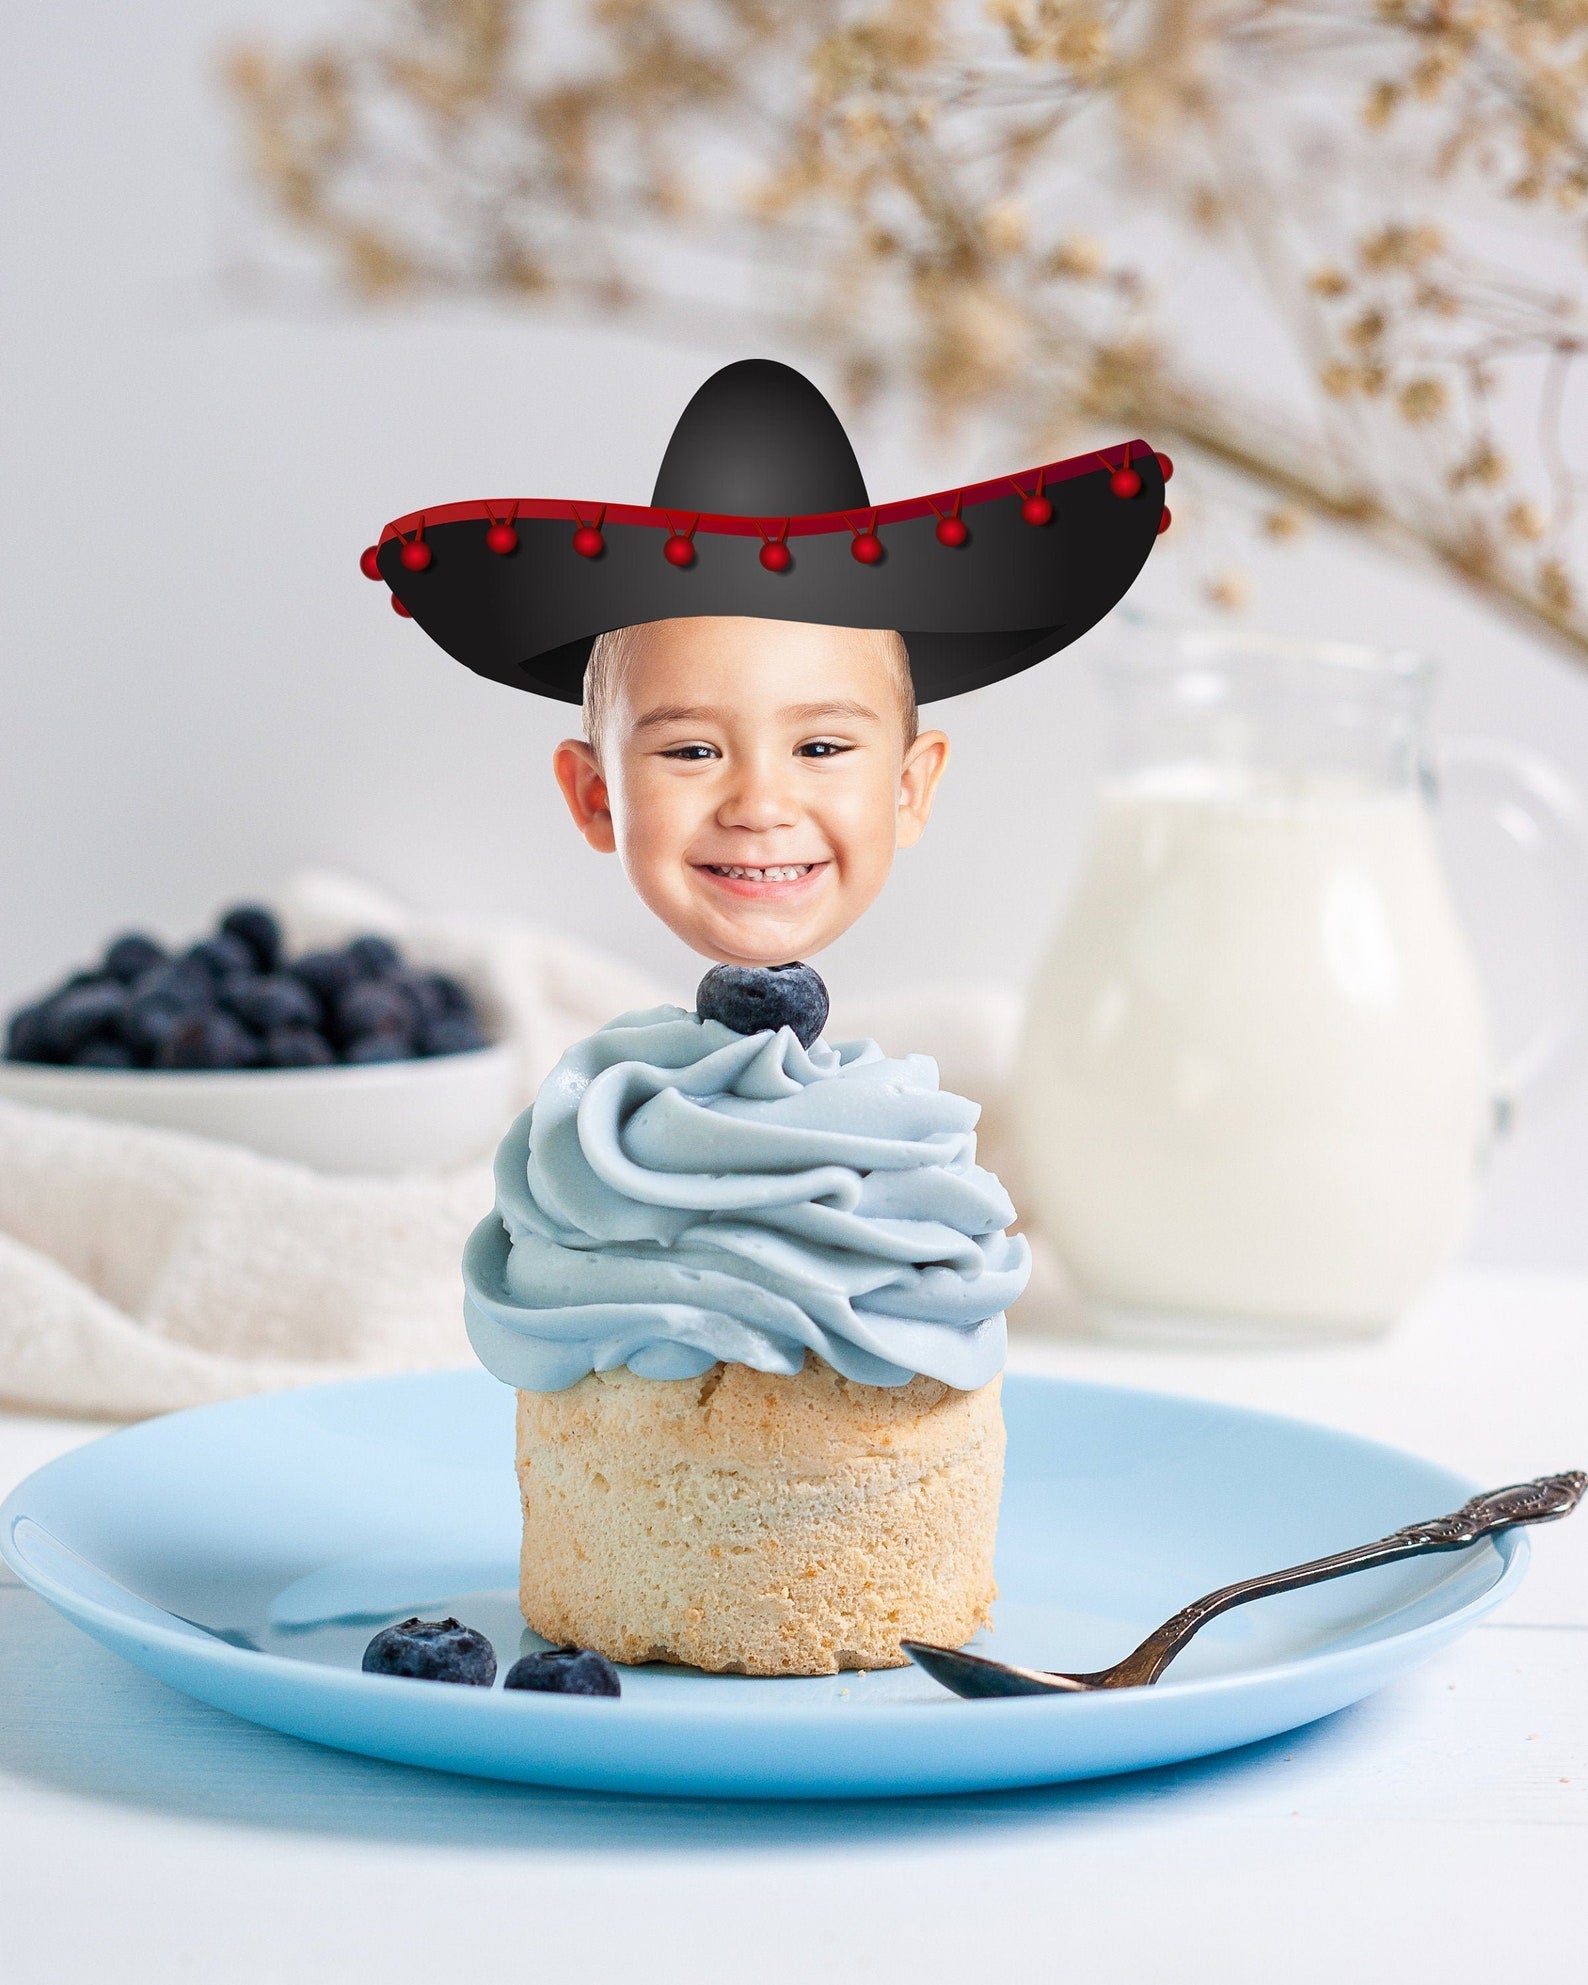 Sombrero Cupcake Topper Printable, Fiesta Cupcake Topper, Face Cut Out Cupcake Toppers, Fiesta Birthday Decorations, Mexican Theme